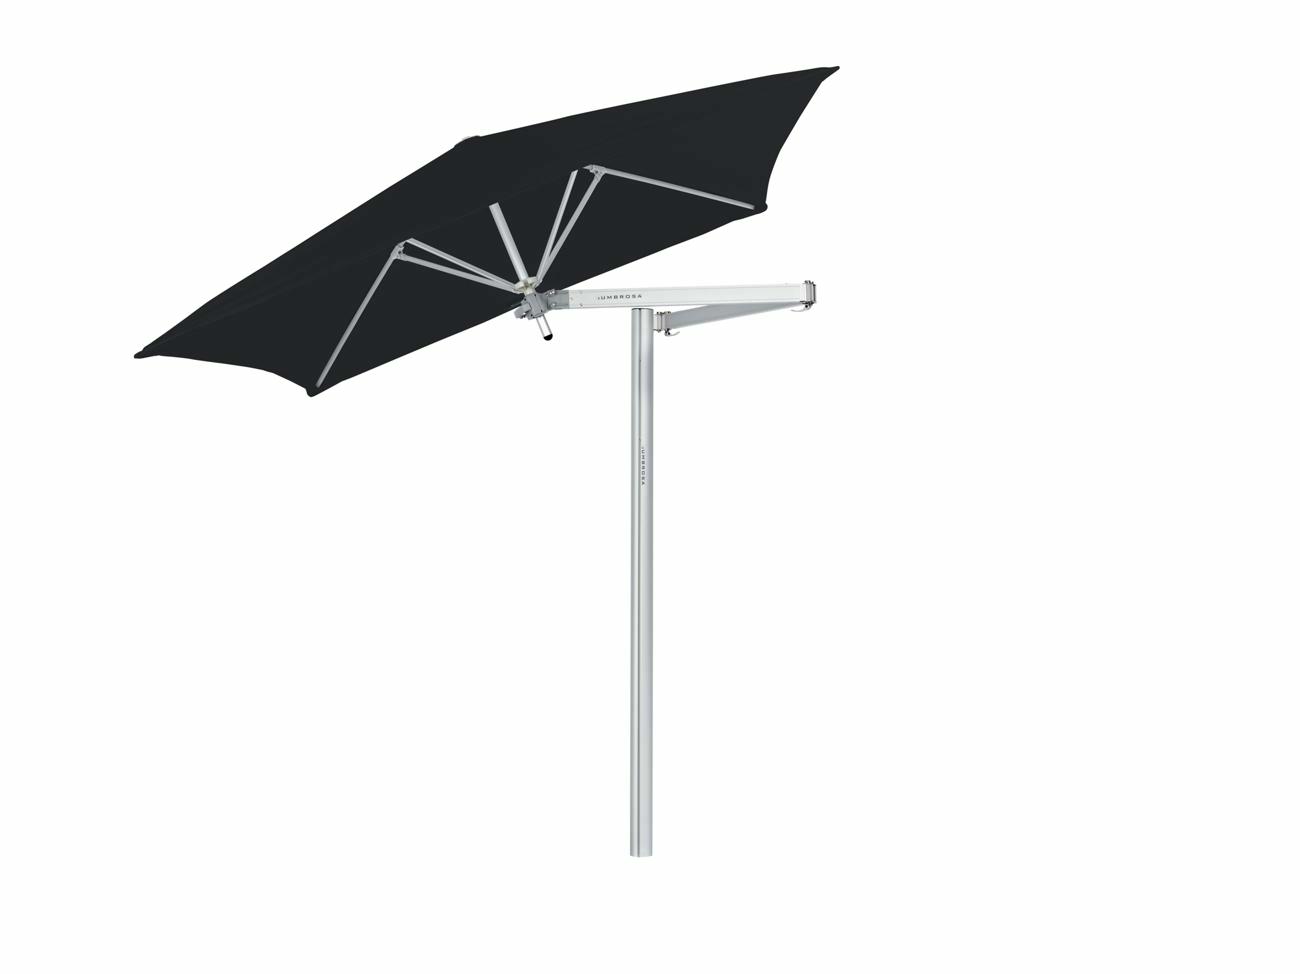 Paraflex cantilever umbrella square 1,9 m with Black fabric and a Classic arm